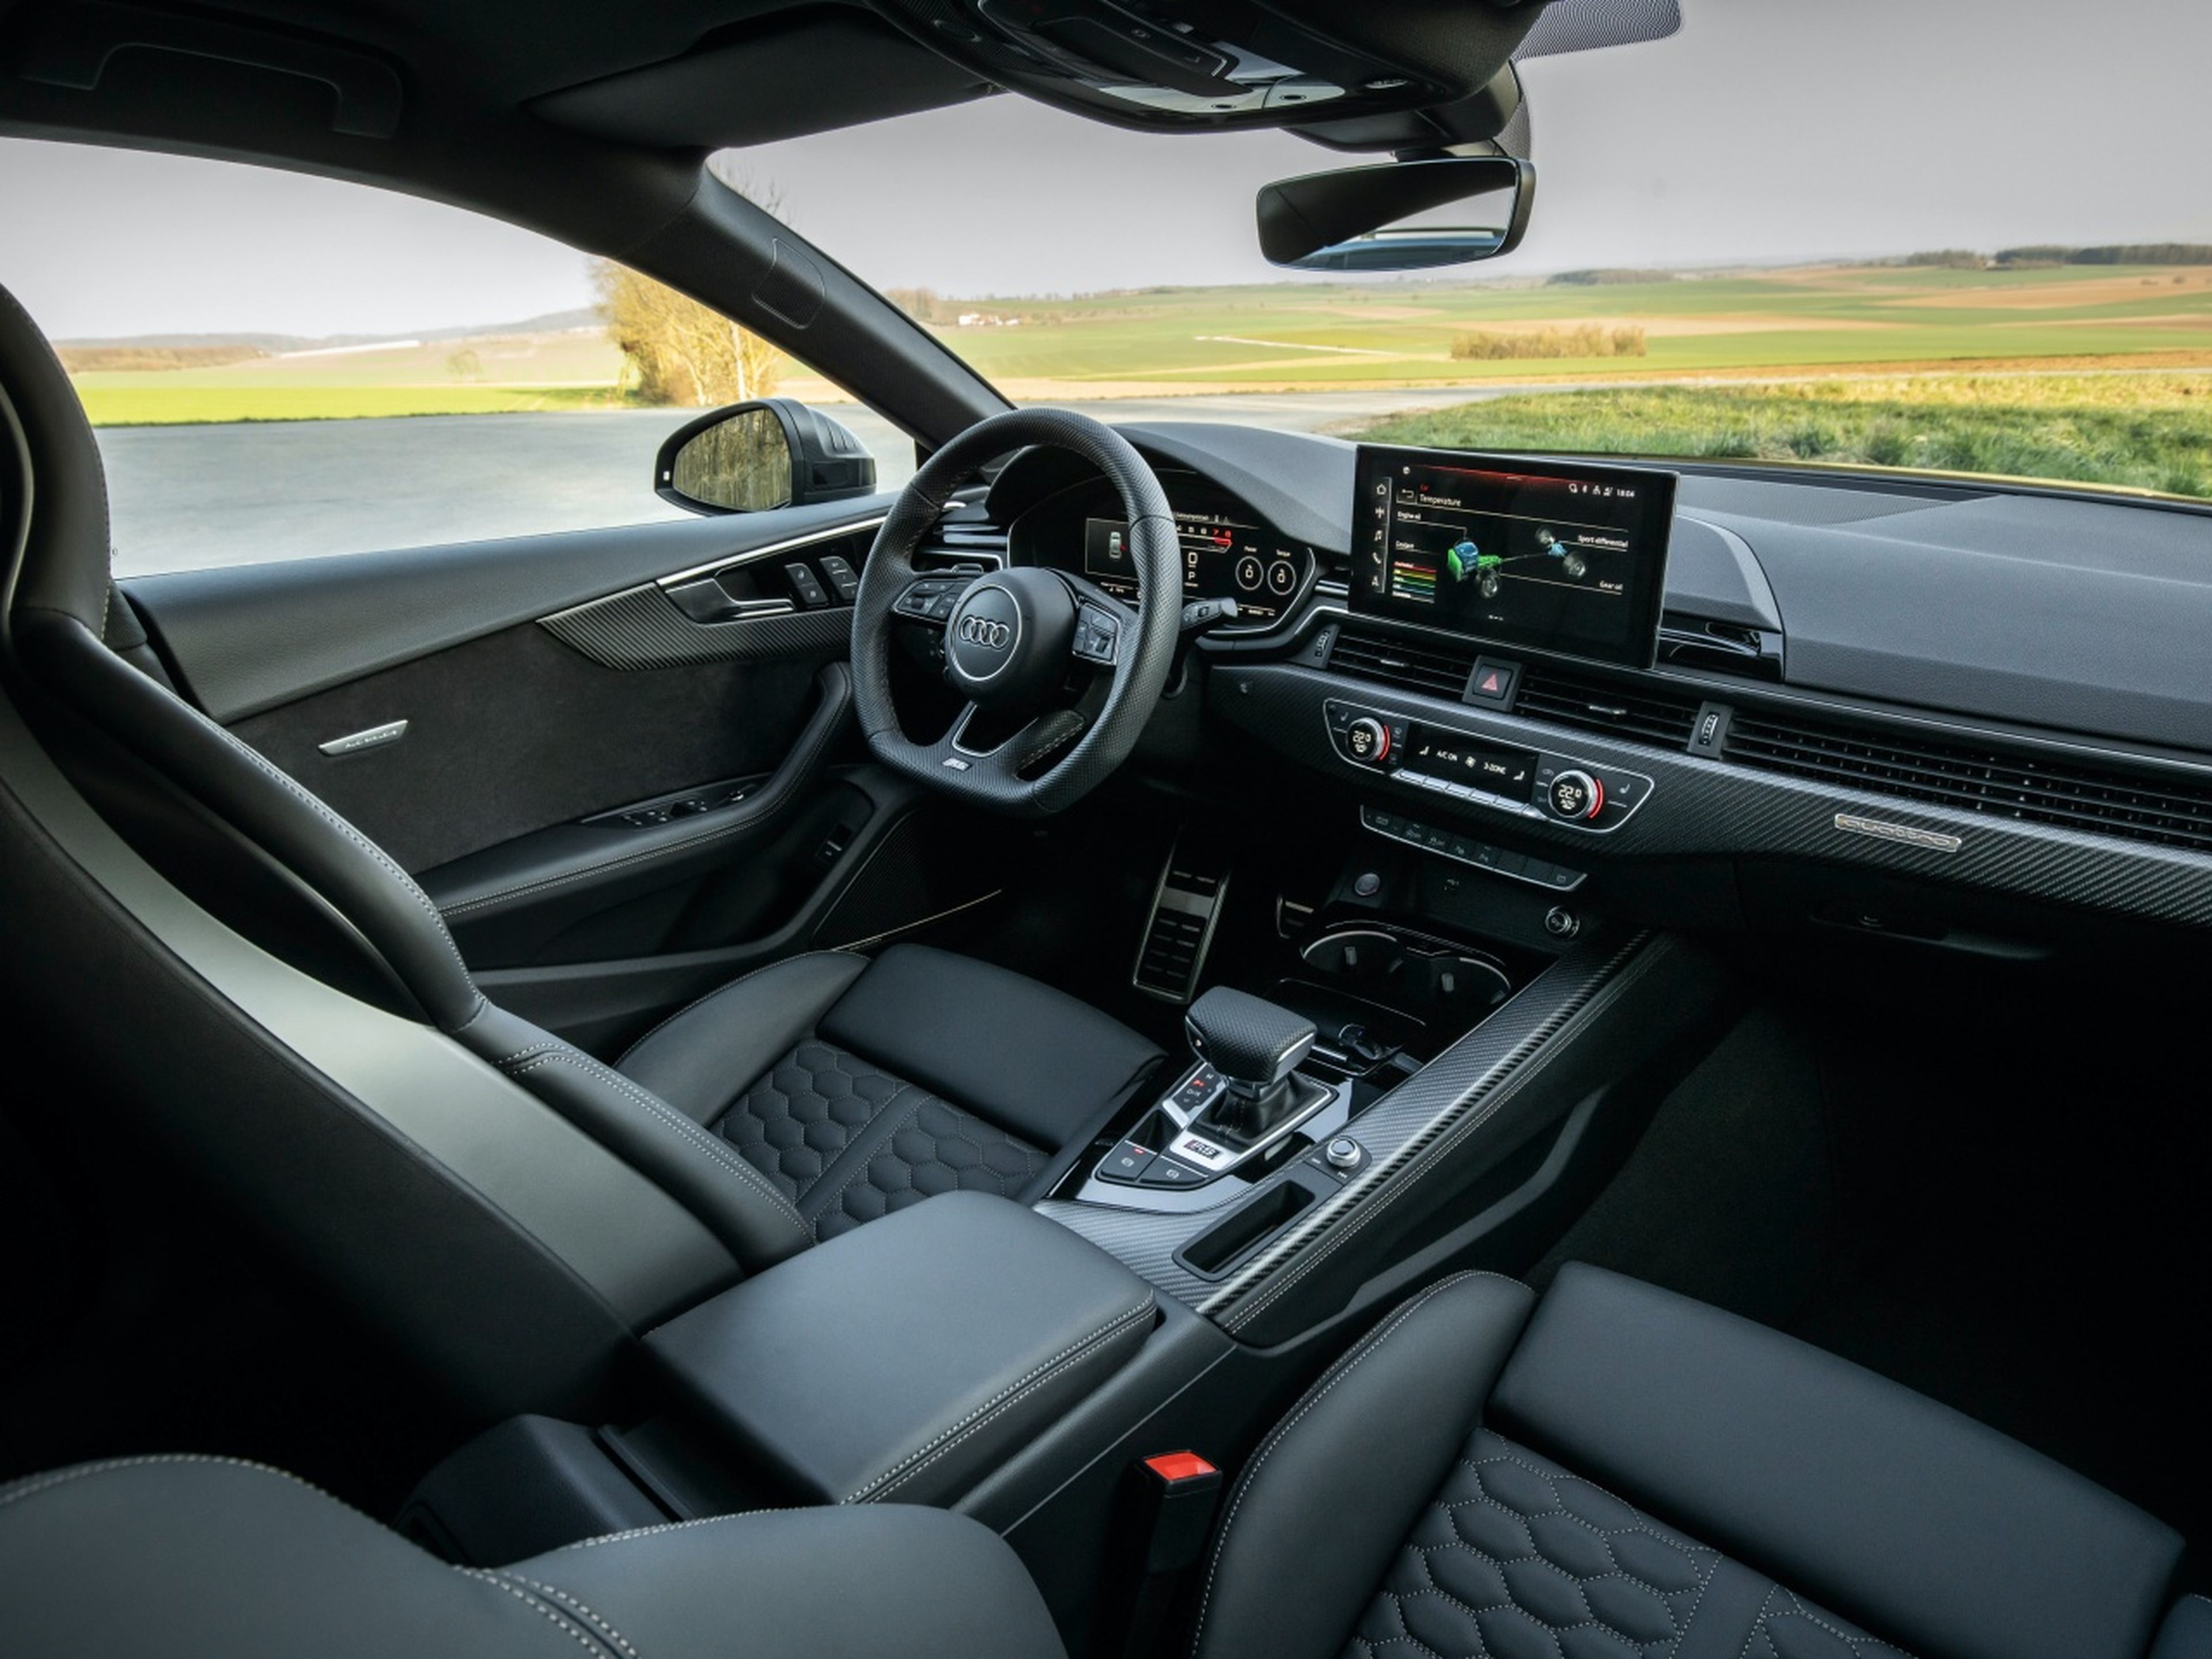 Audi RS 5 Sportback interior